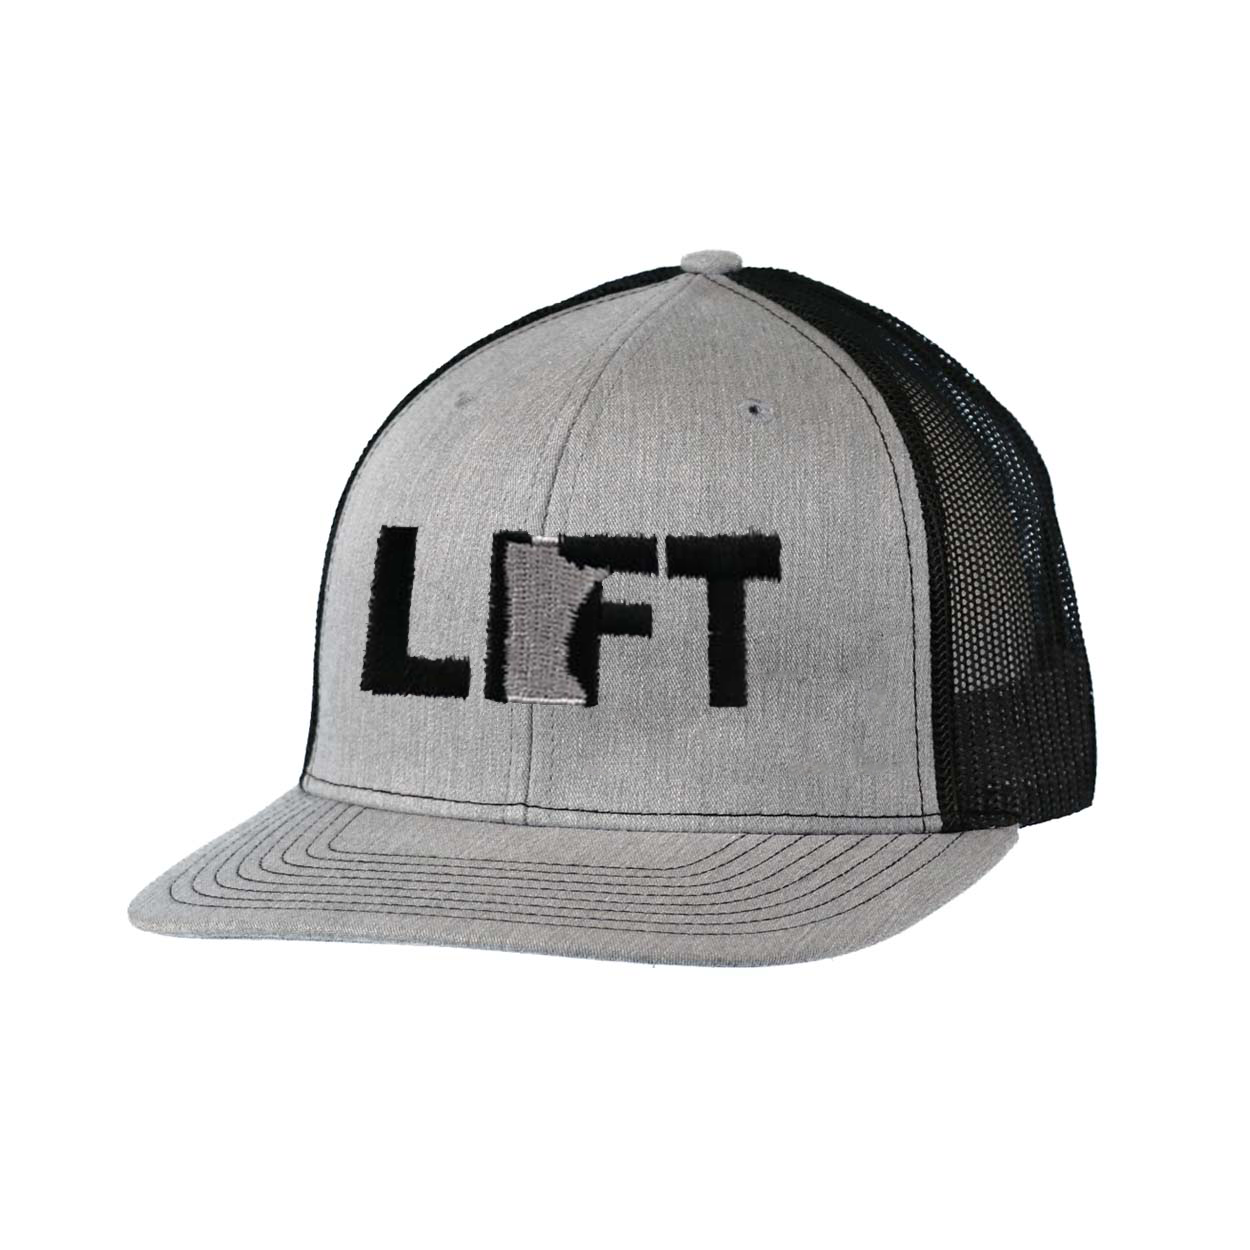 Lift Minnesota Classic Embroidered Snapback Trucker Hat Heather Gray/Black